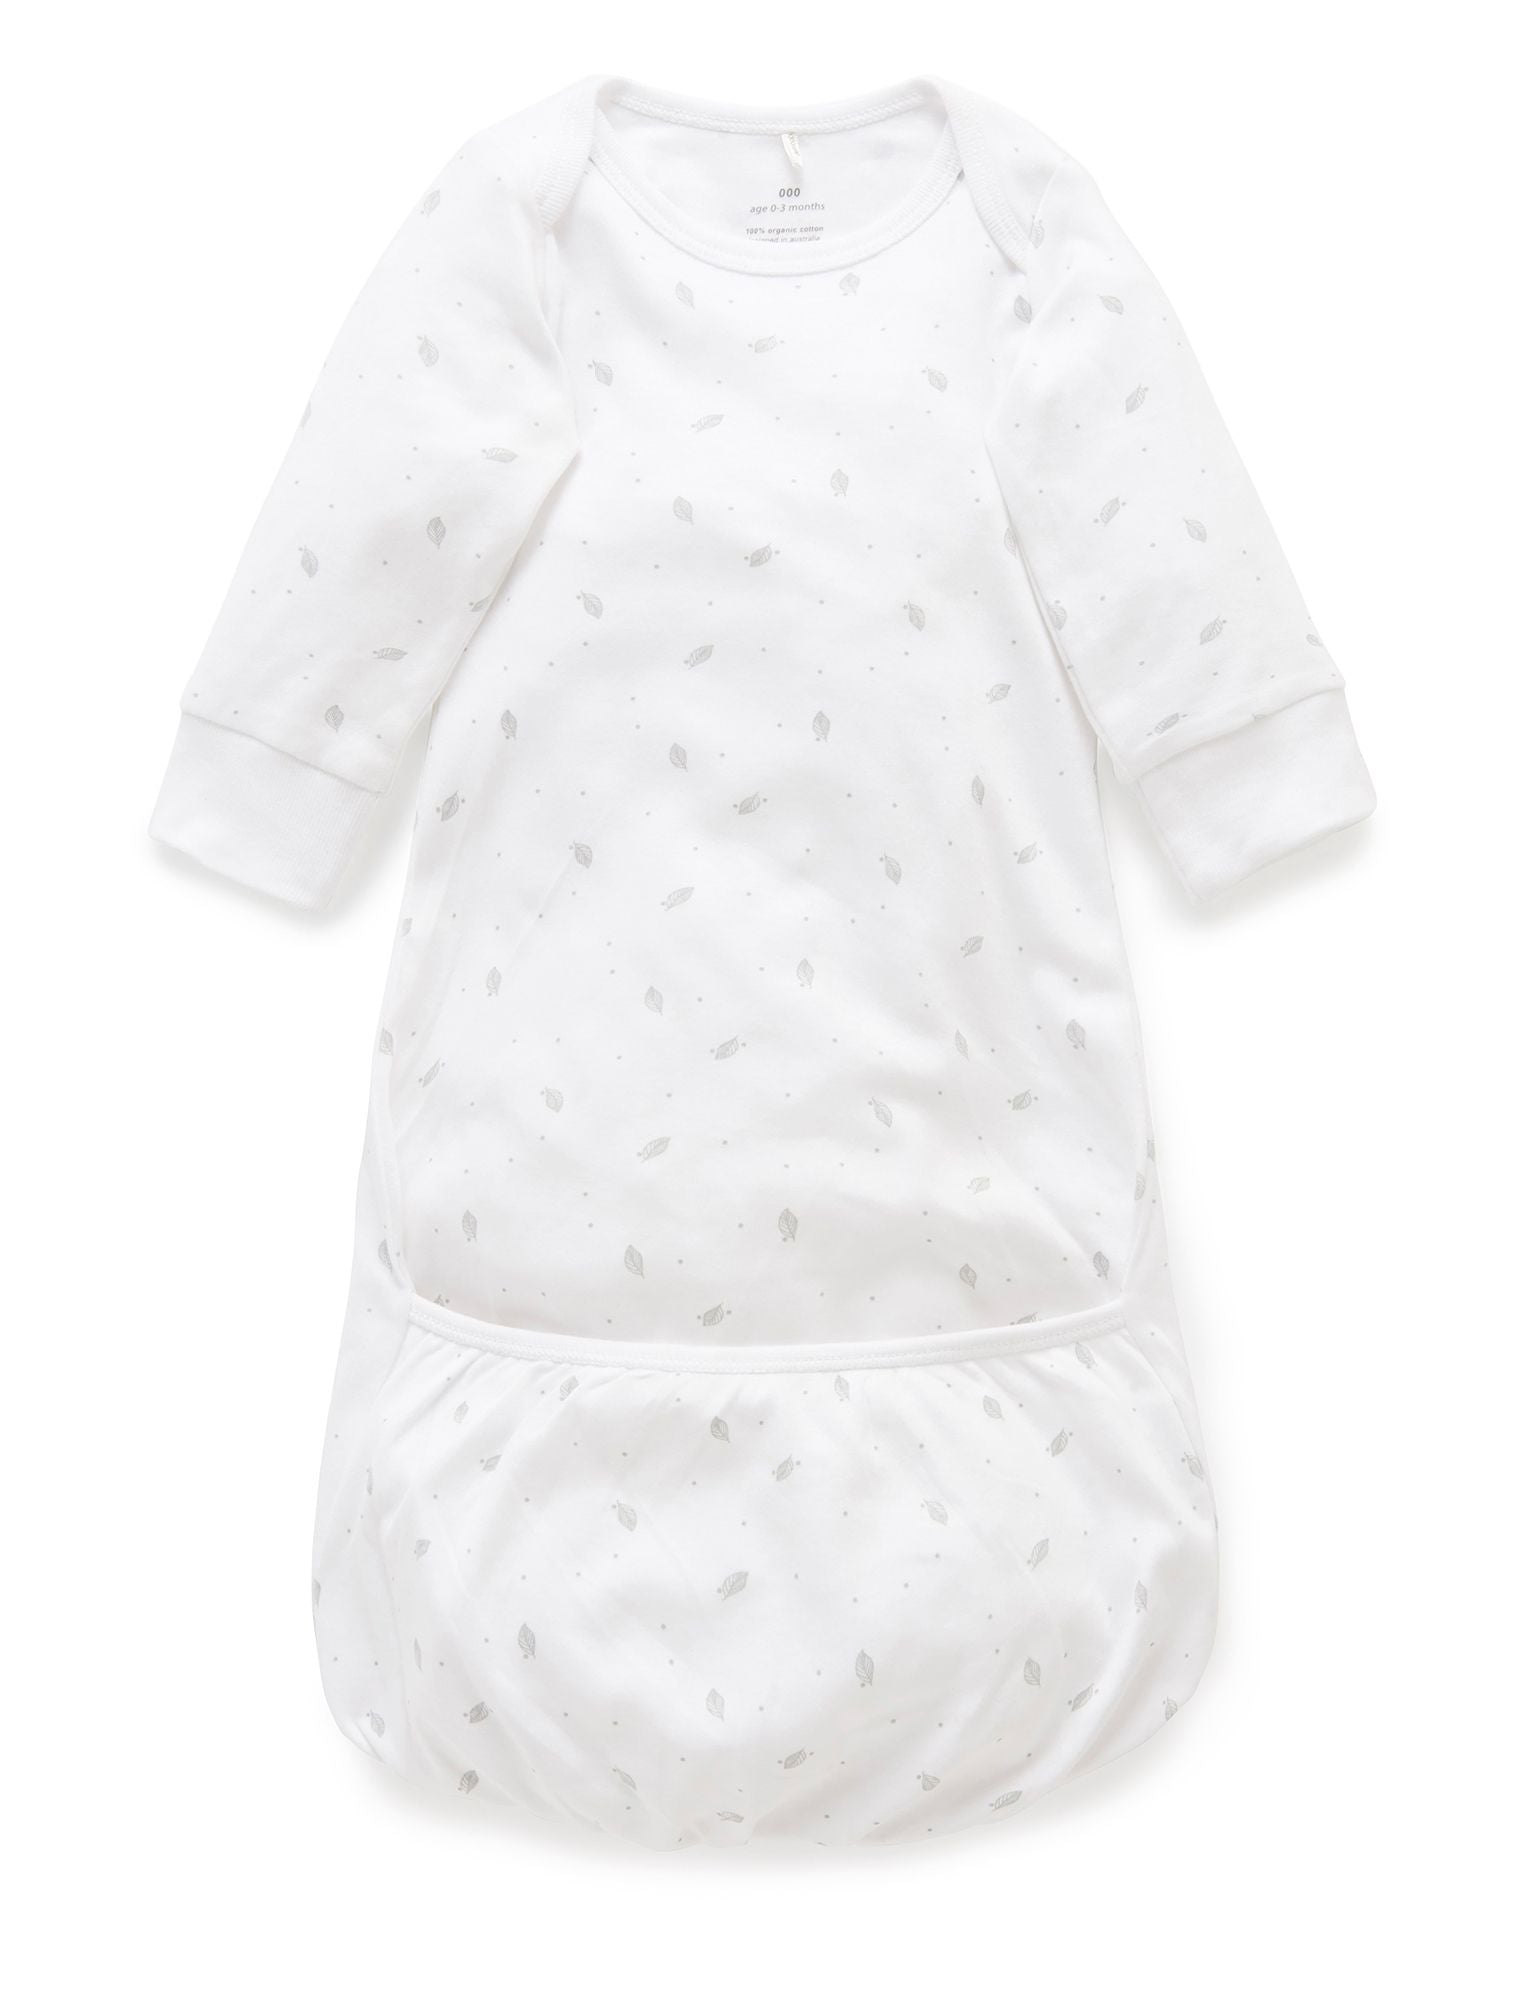 buy-winter-sleepsuit-for-newborn-baby-0-3-months-online-australia